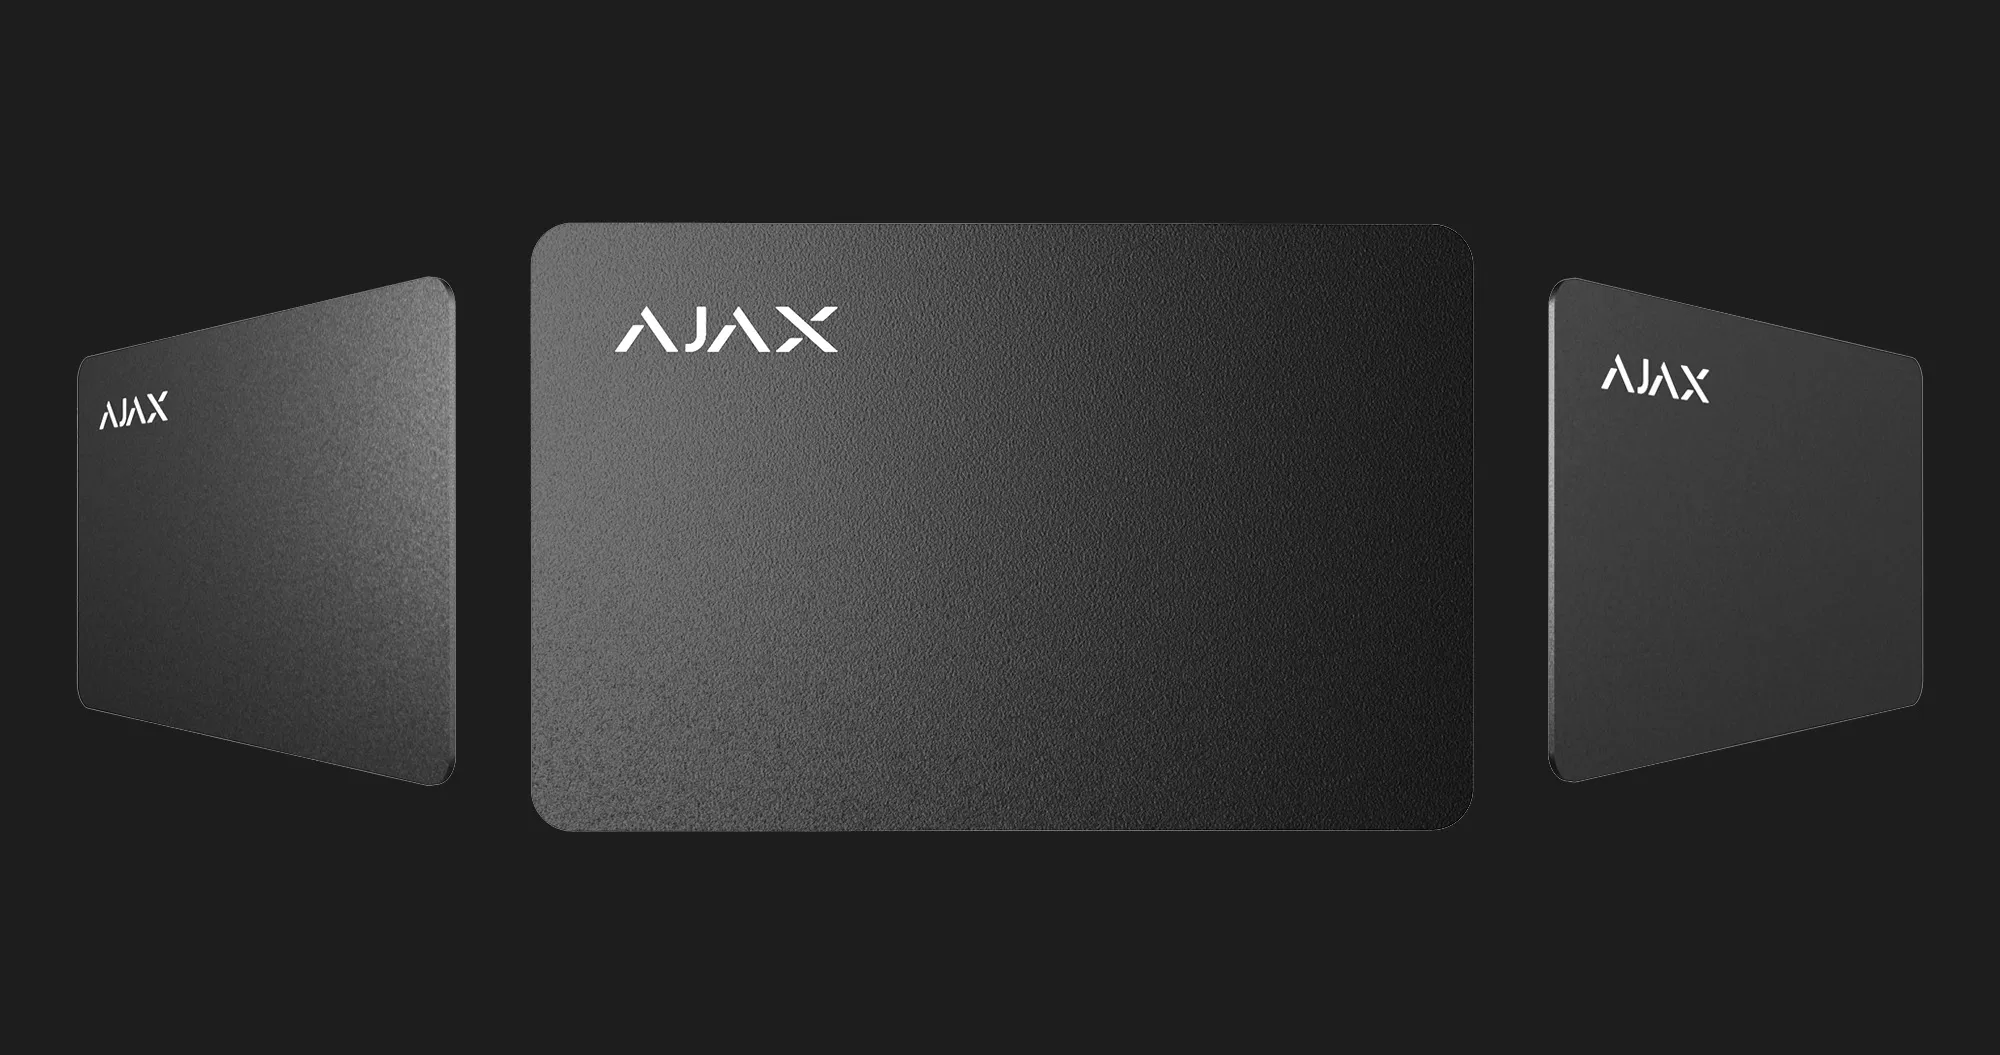 Бесконтактная карта Ajax Pass Jeweler, 10 шт (White)